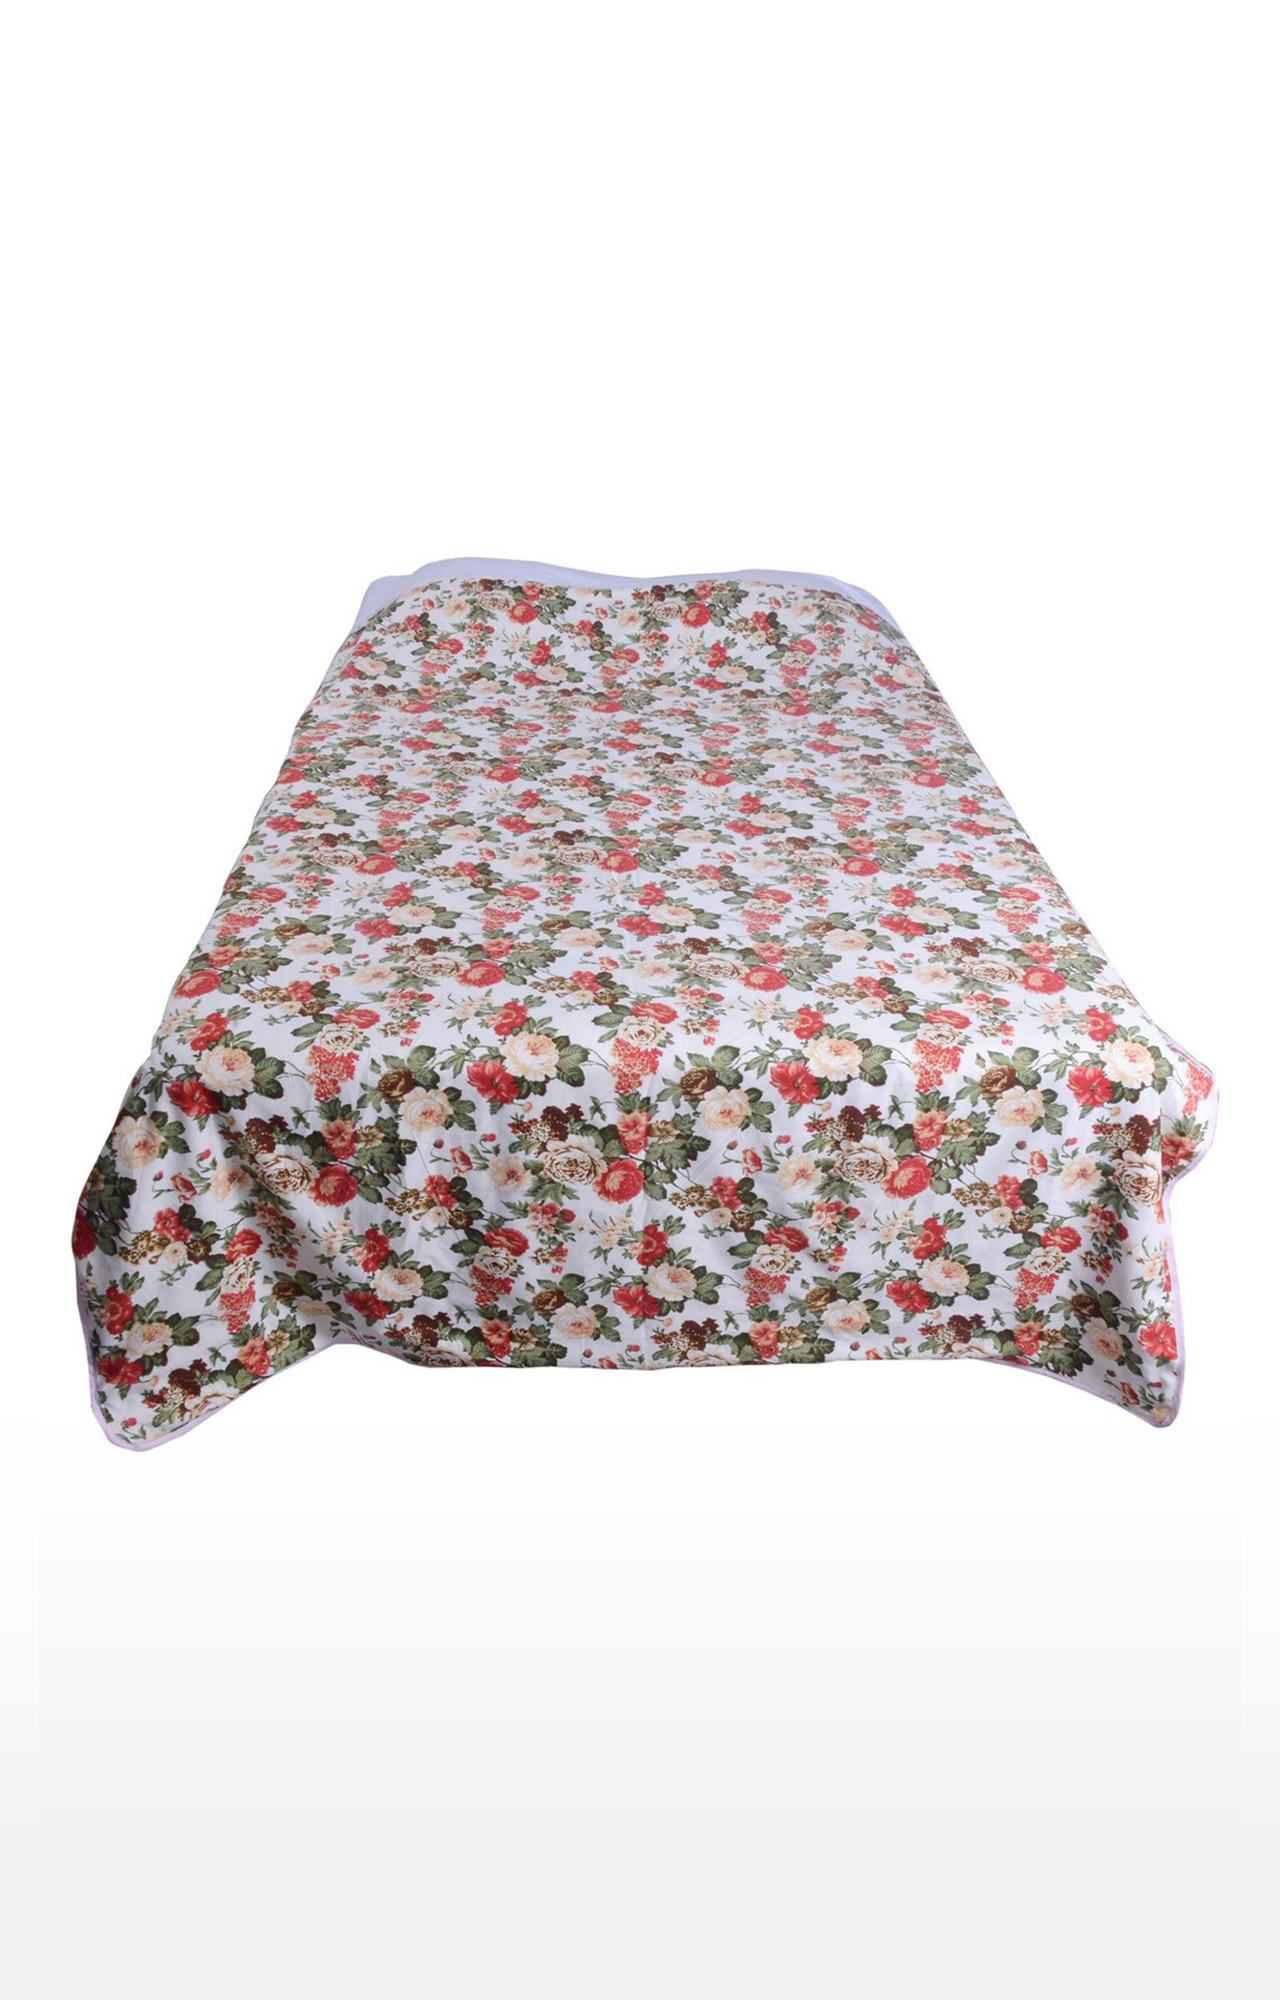 V Brown | Red Garland Flower Printed Cotton 3 Layer Single Bed Quilt Dohar